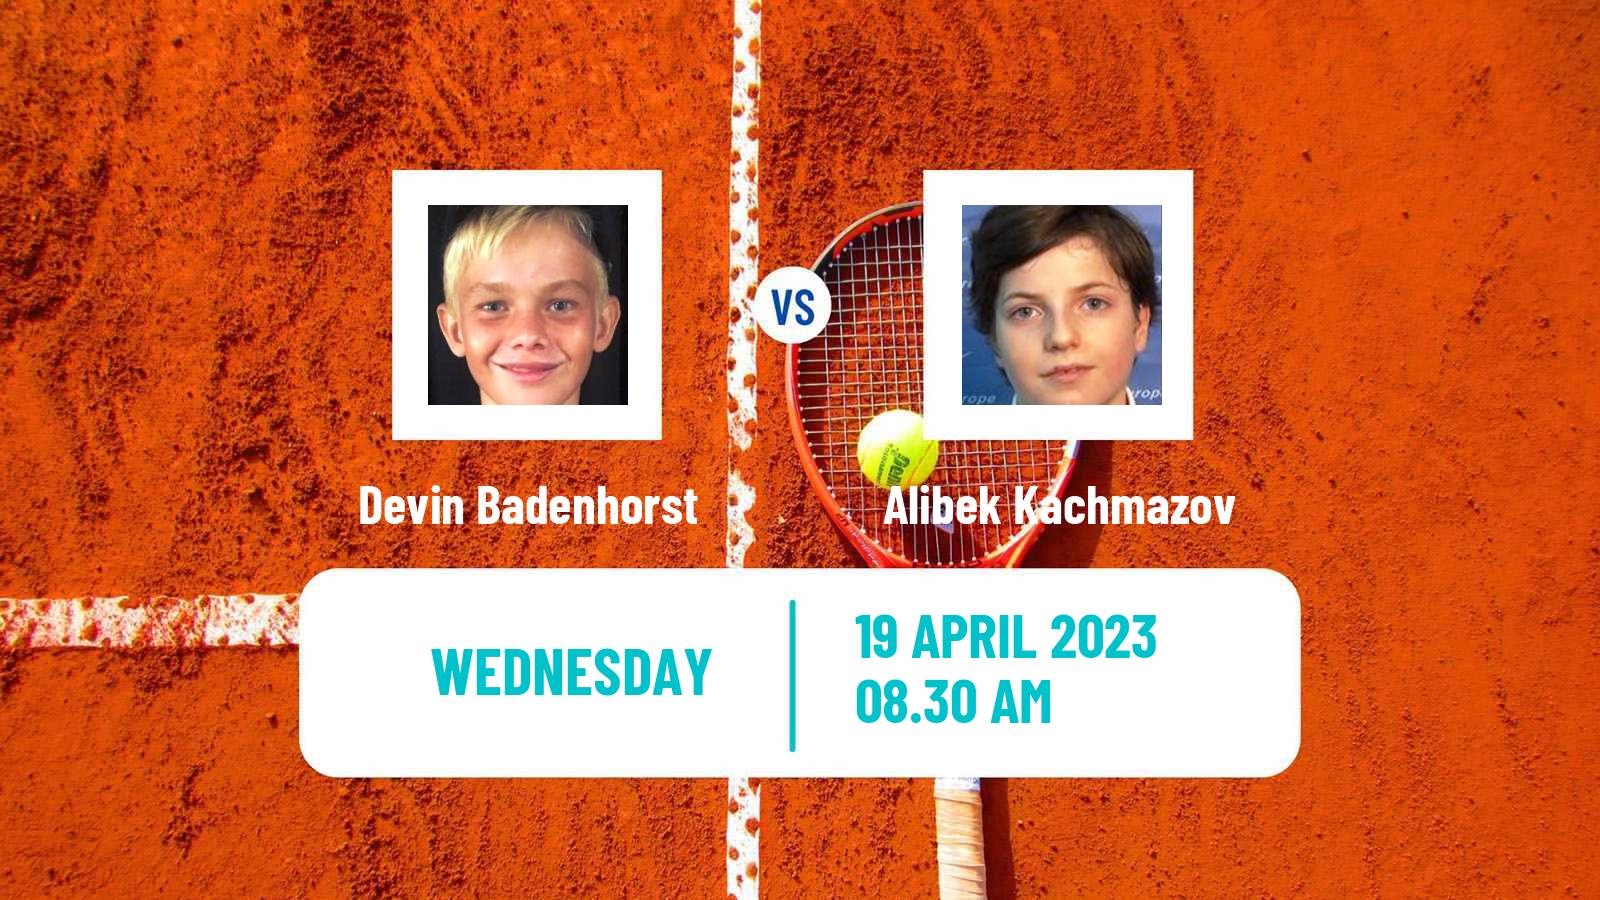 Tennis ITF Tournaments Devin Badenhorst - Alibek Kachmazov